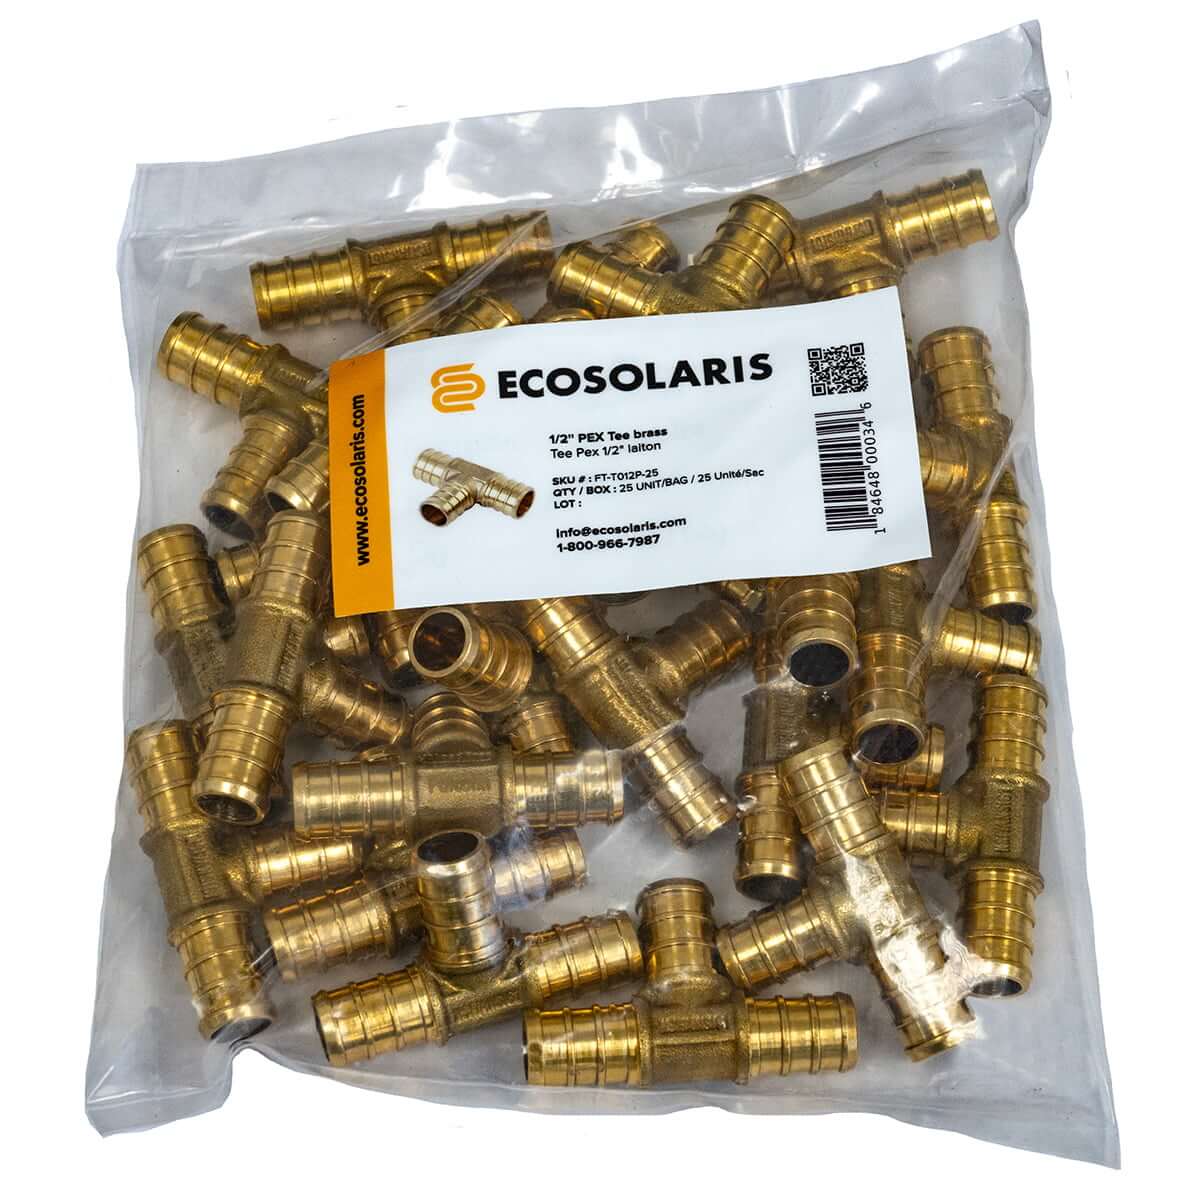 Nordik Radiant 1/2″ PEX Tee brass - bag of 25 units